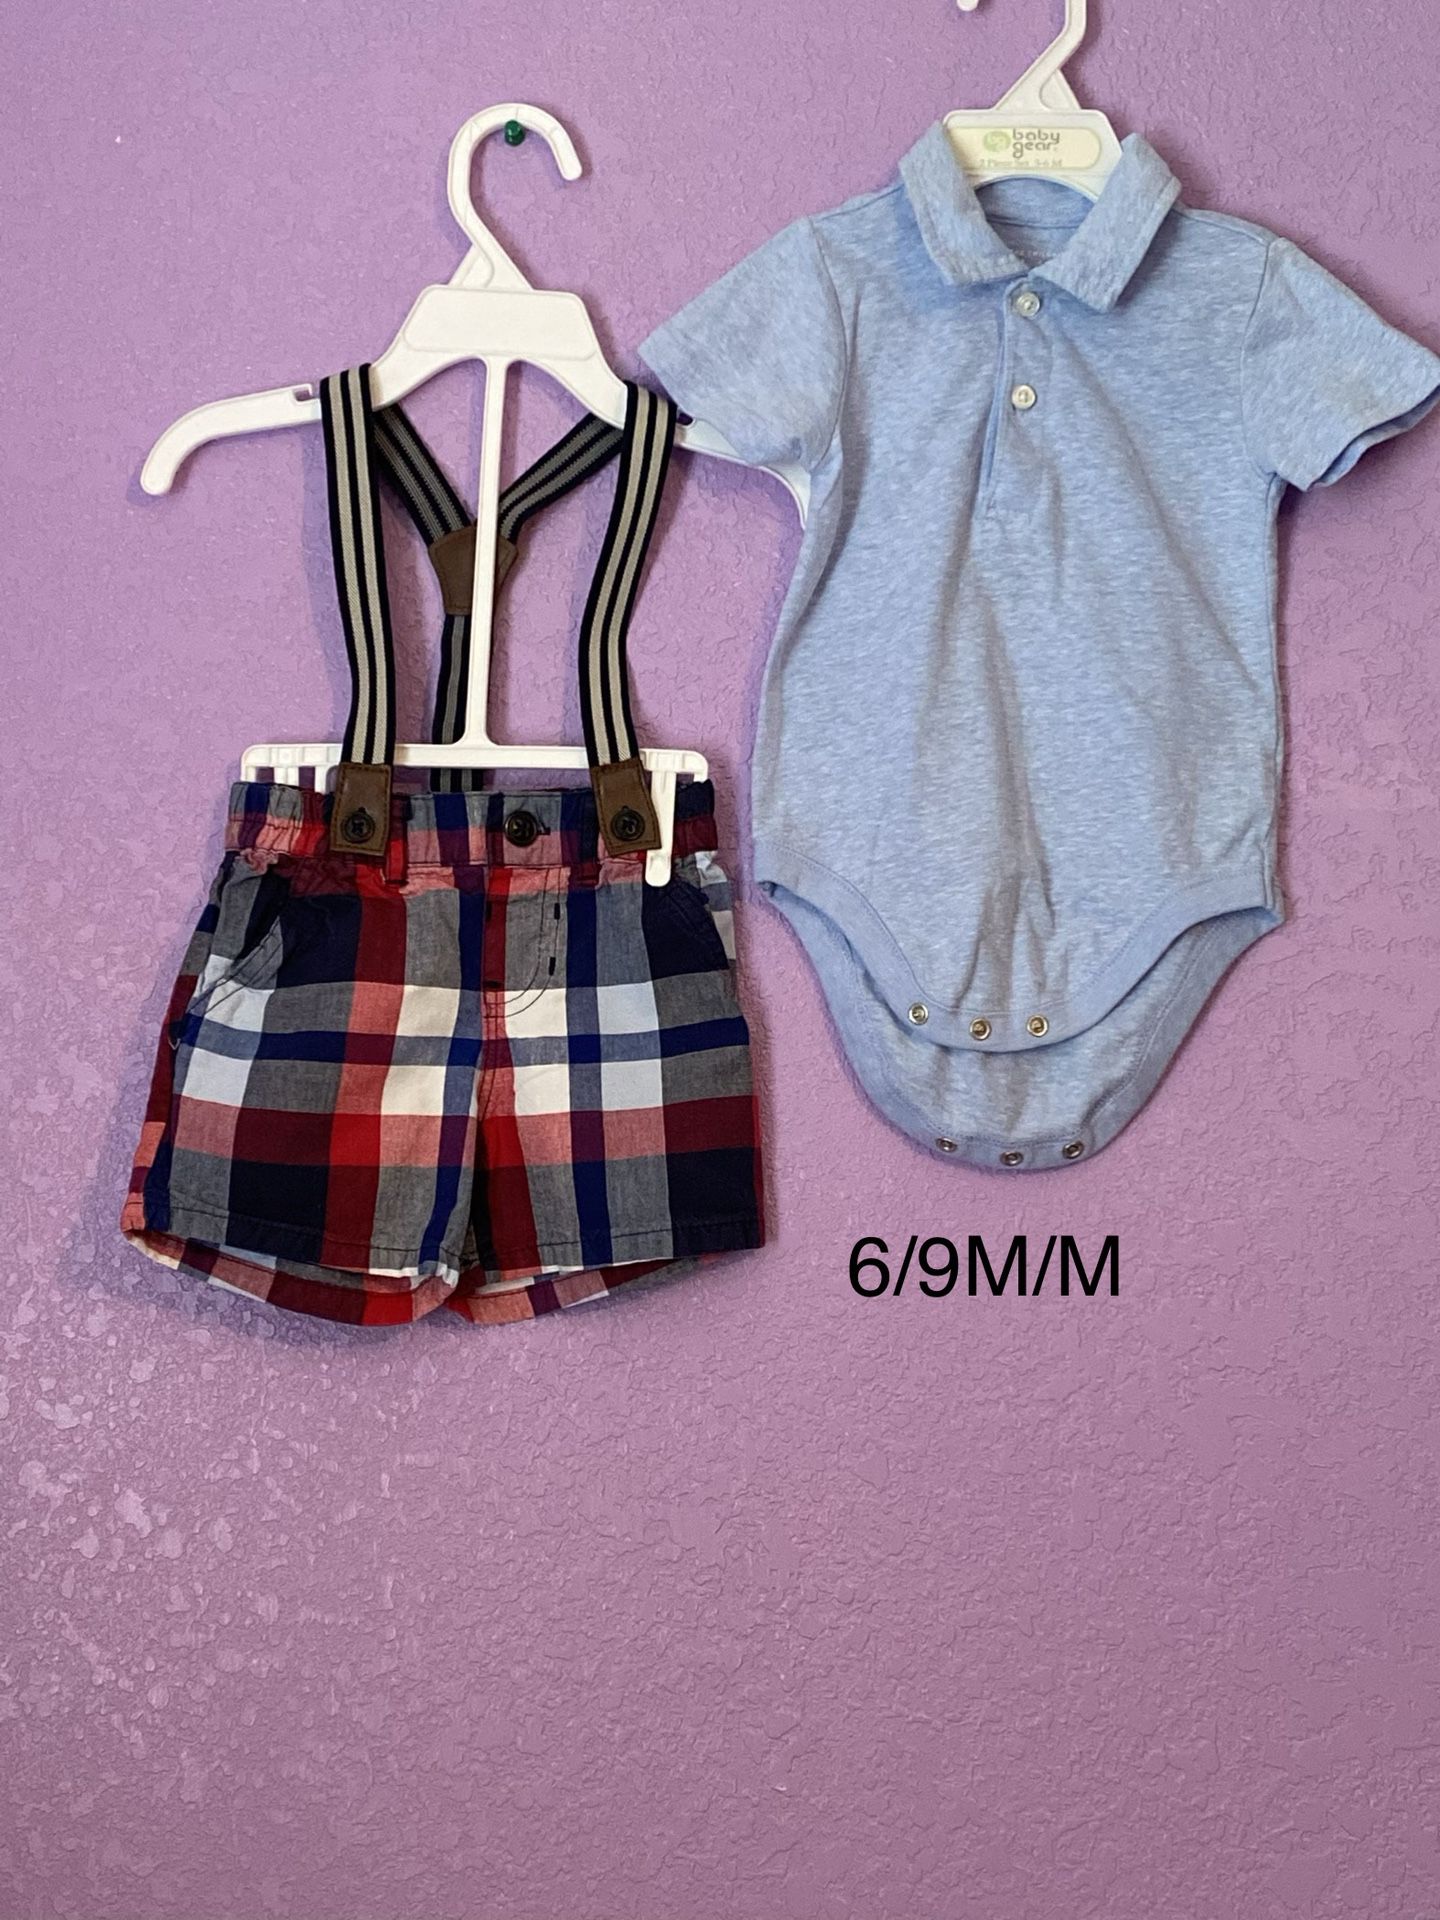 Baby Clothes Different Sizes  / Ropa De Bebe Diferentes Tallas 